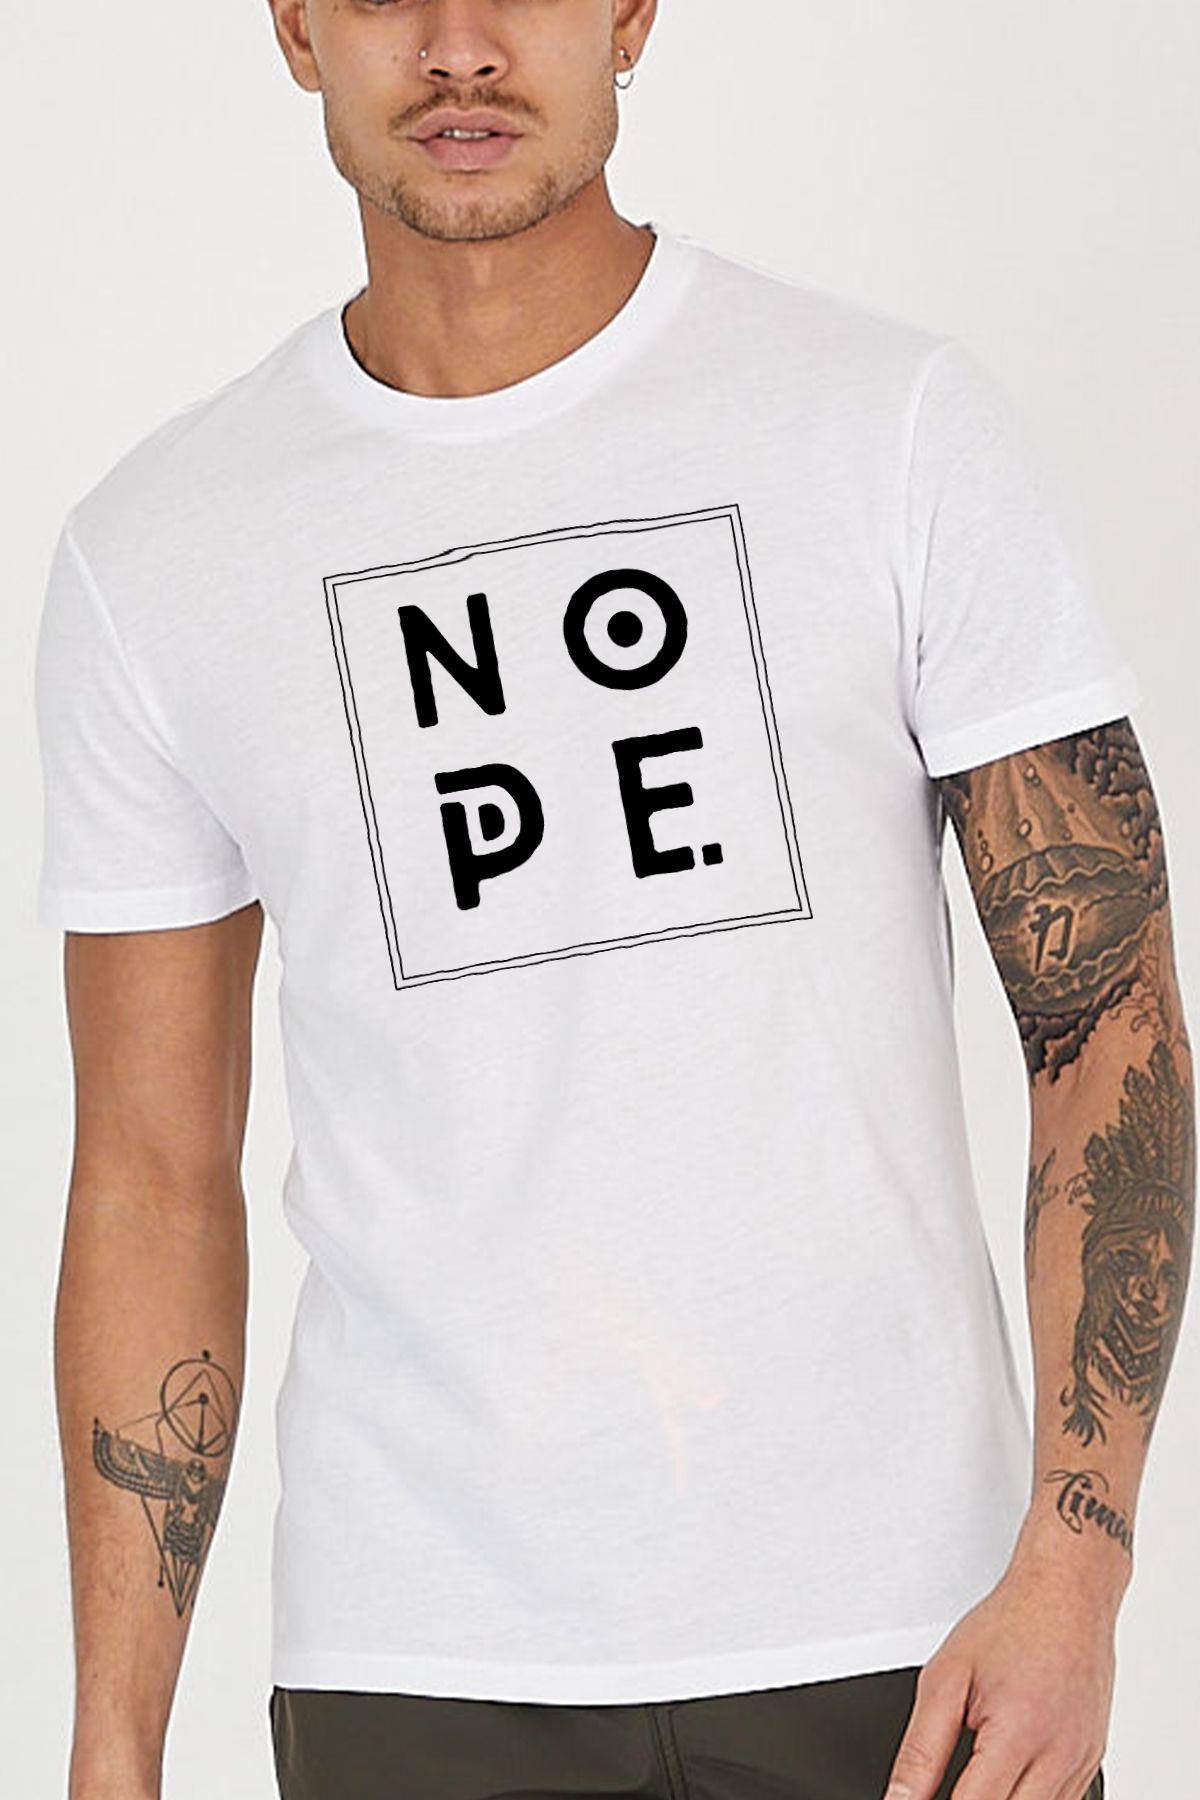 Nope Slogan Printed Crew Neck Men's T -shirt